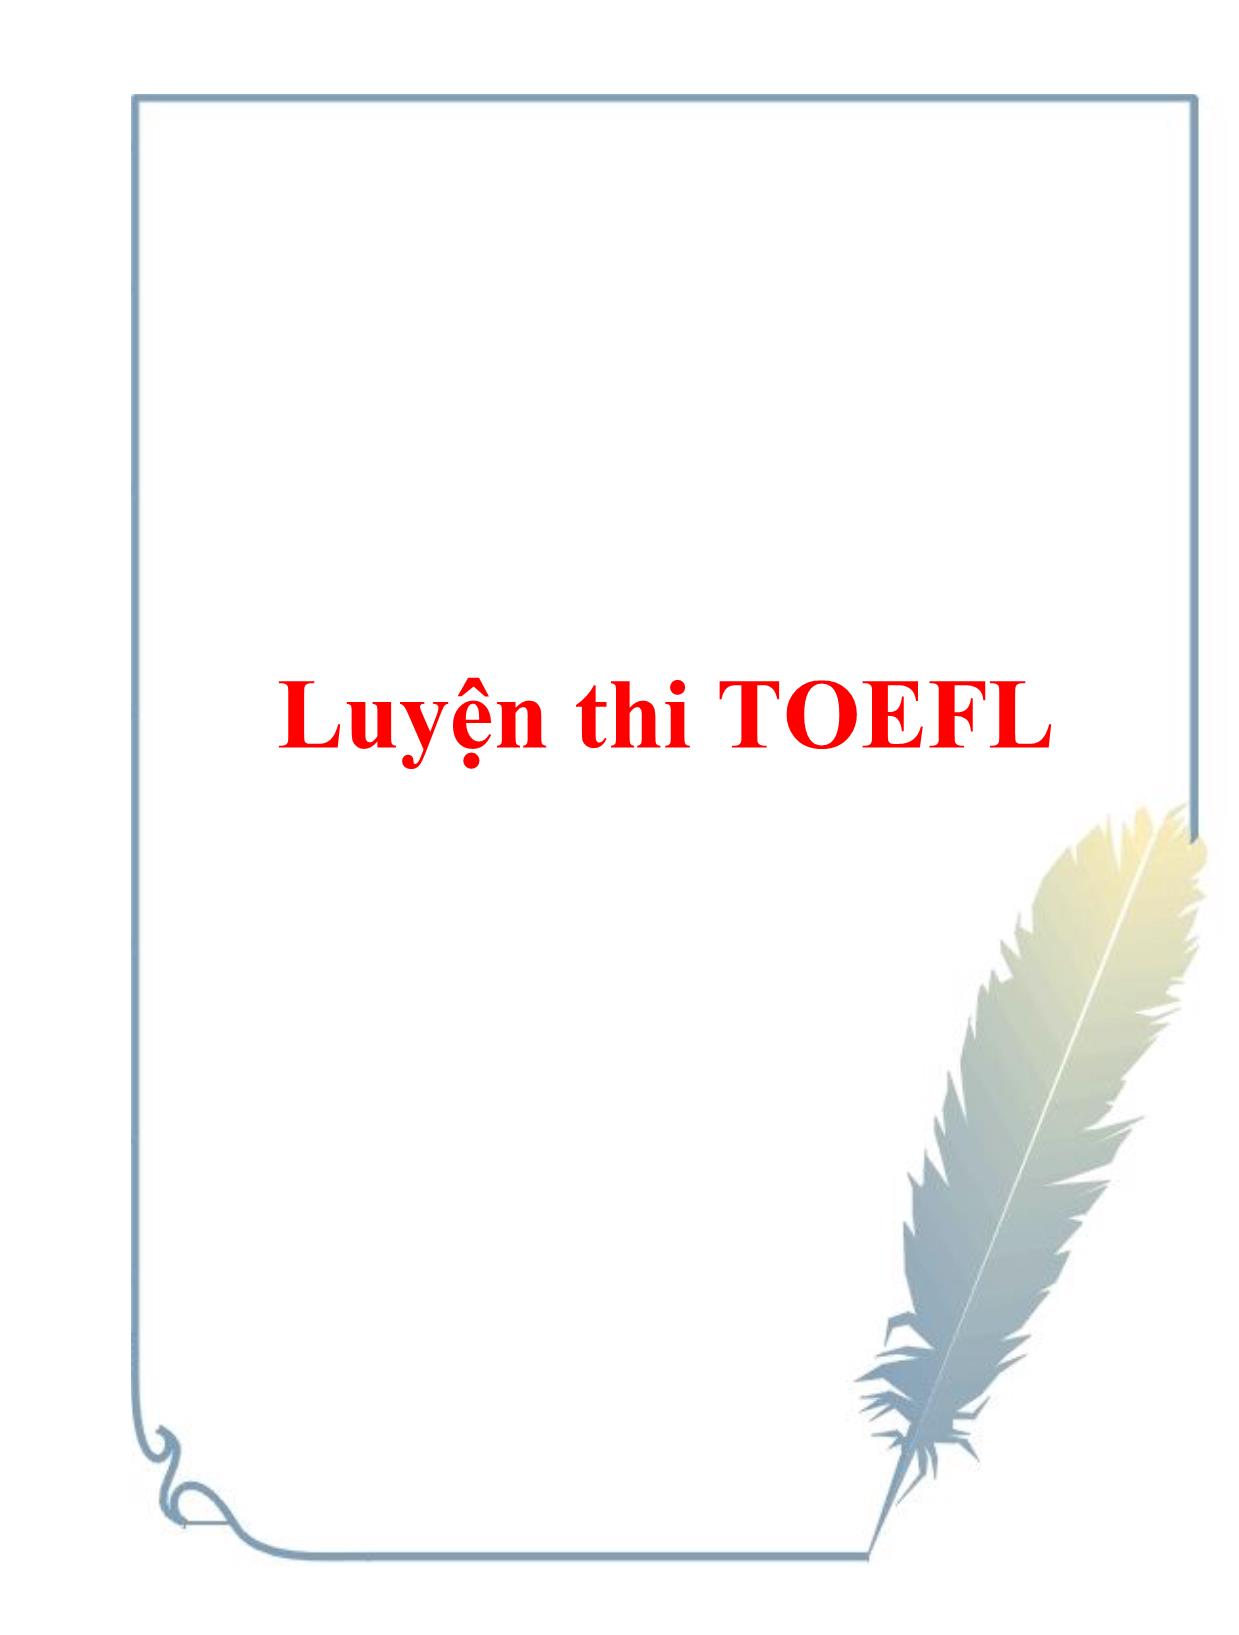 Luyện thi TOEFL trang 1